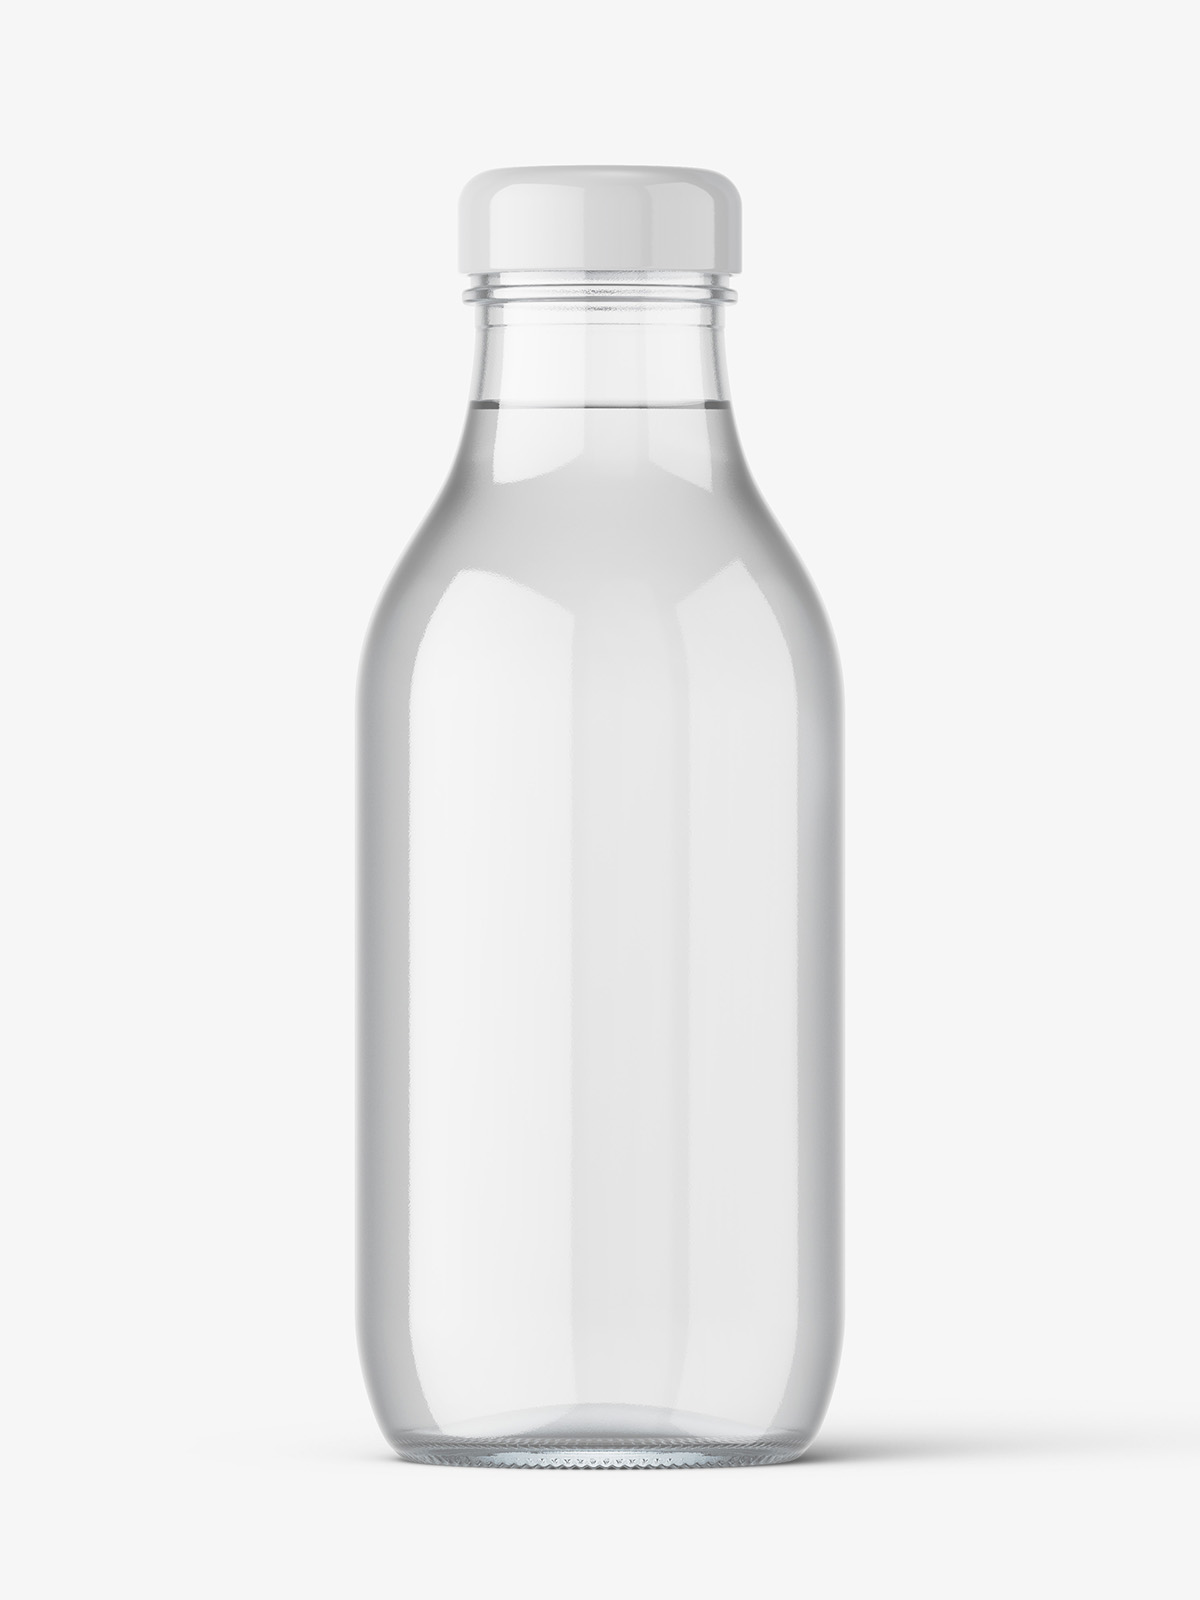 https://smartymockups.com/wp-content/uploads/2021/02/Water_Bottle_Mockup_1.jpg